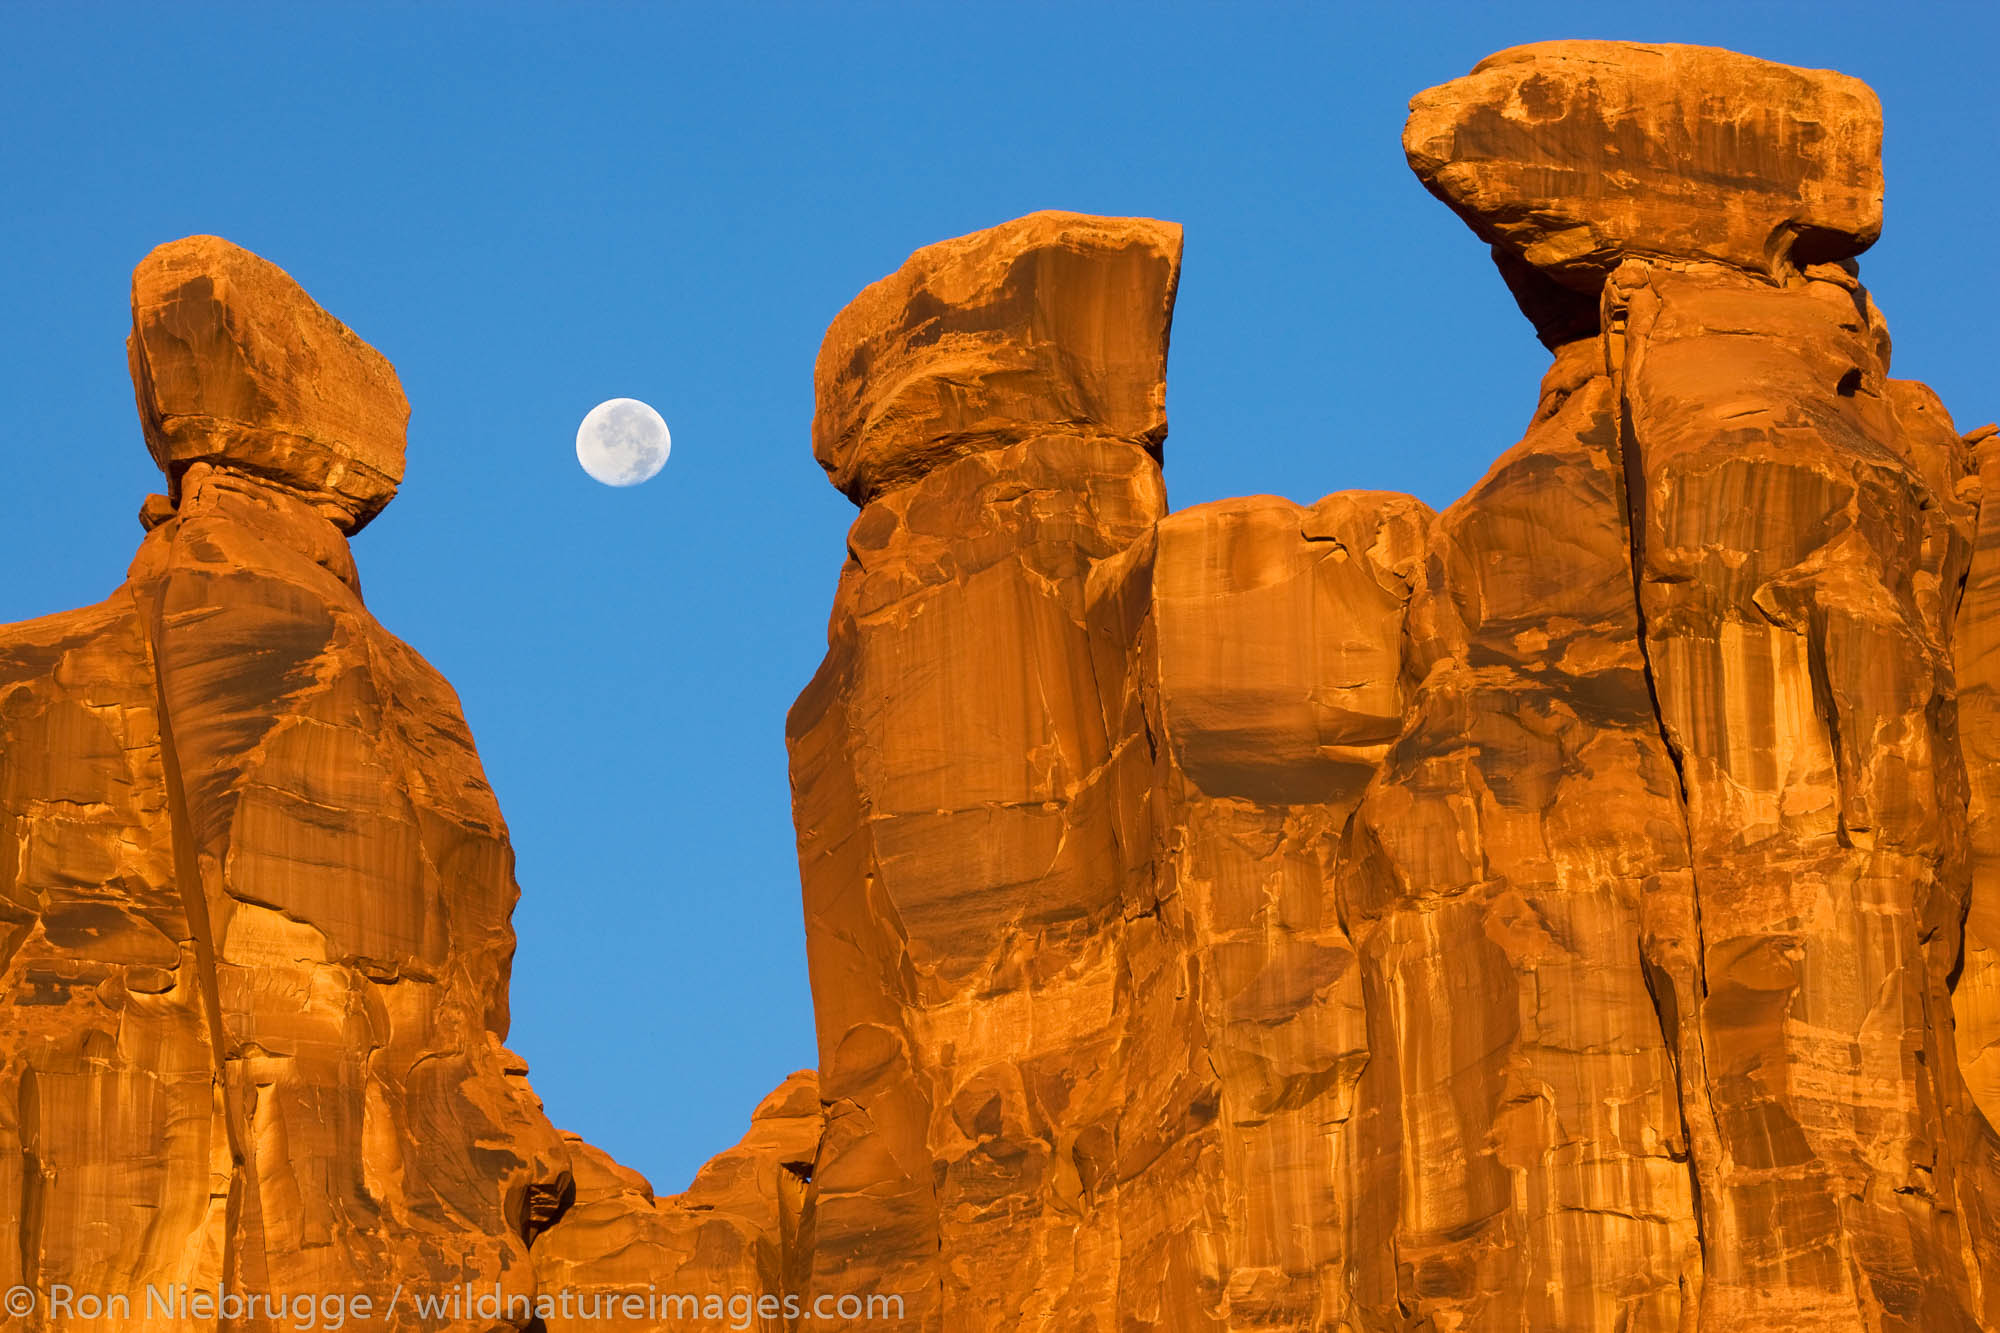 Near full moon along with the Three Gossips, Arches National Park, near Moab, Utah.